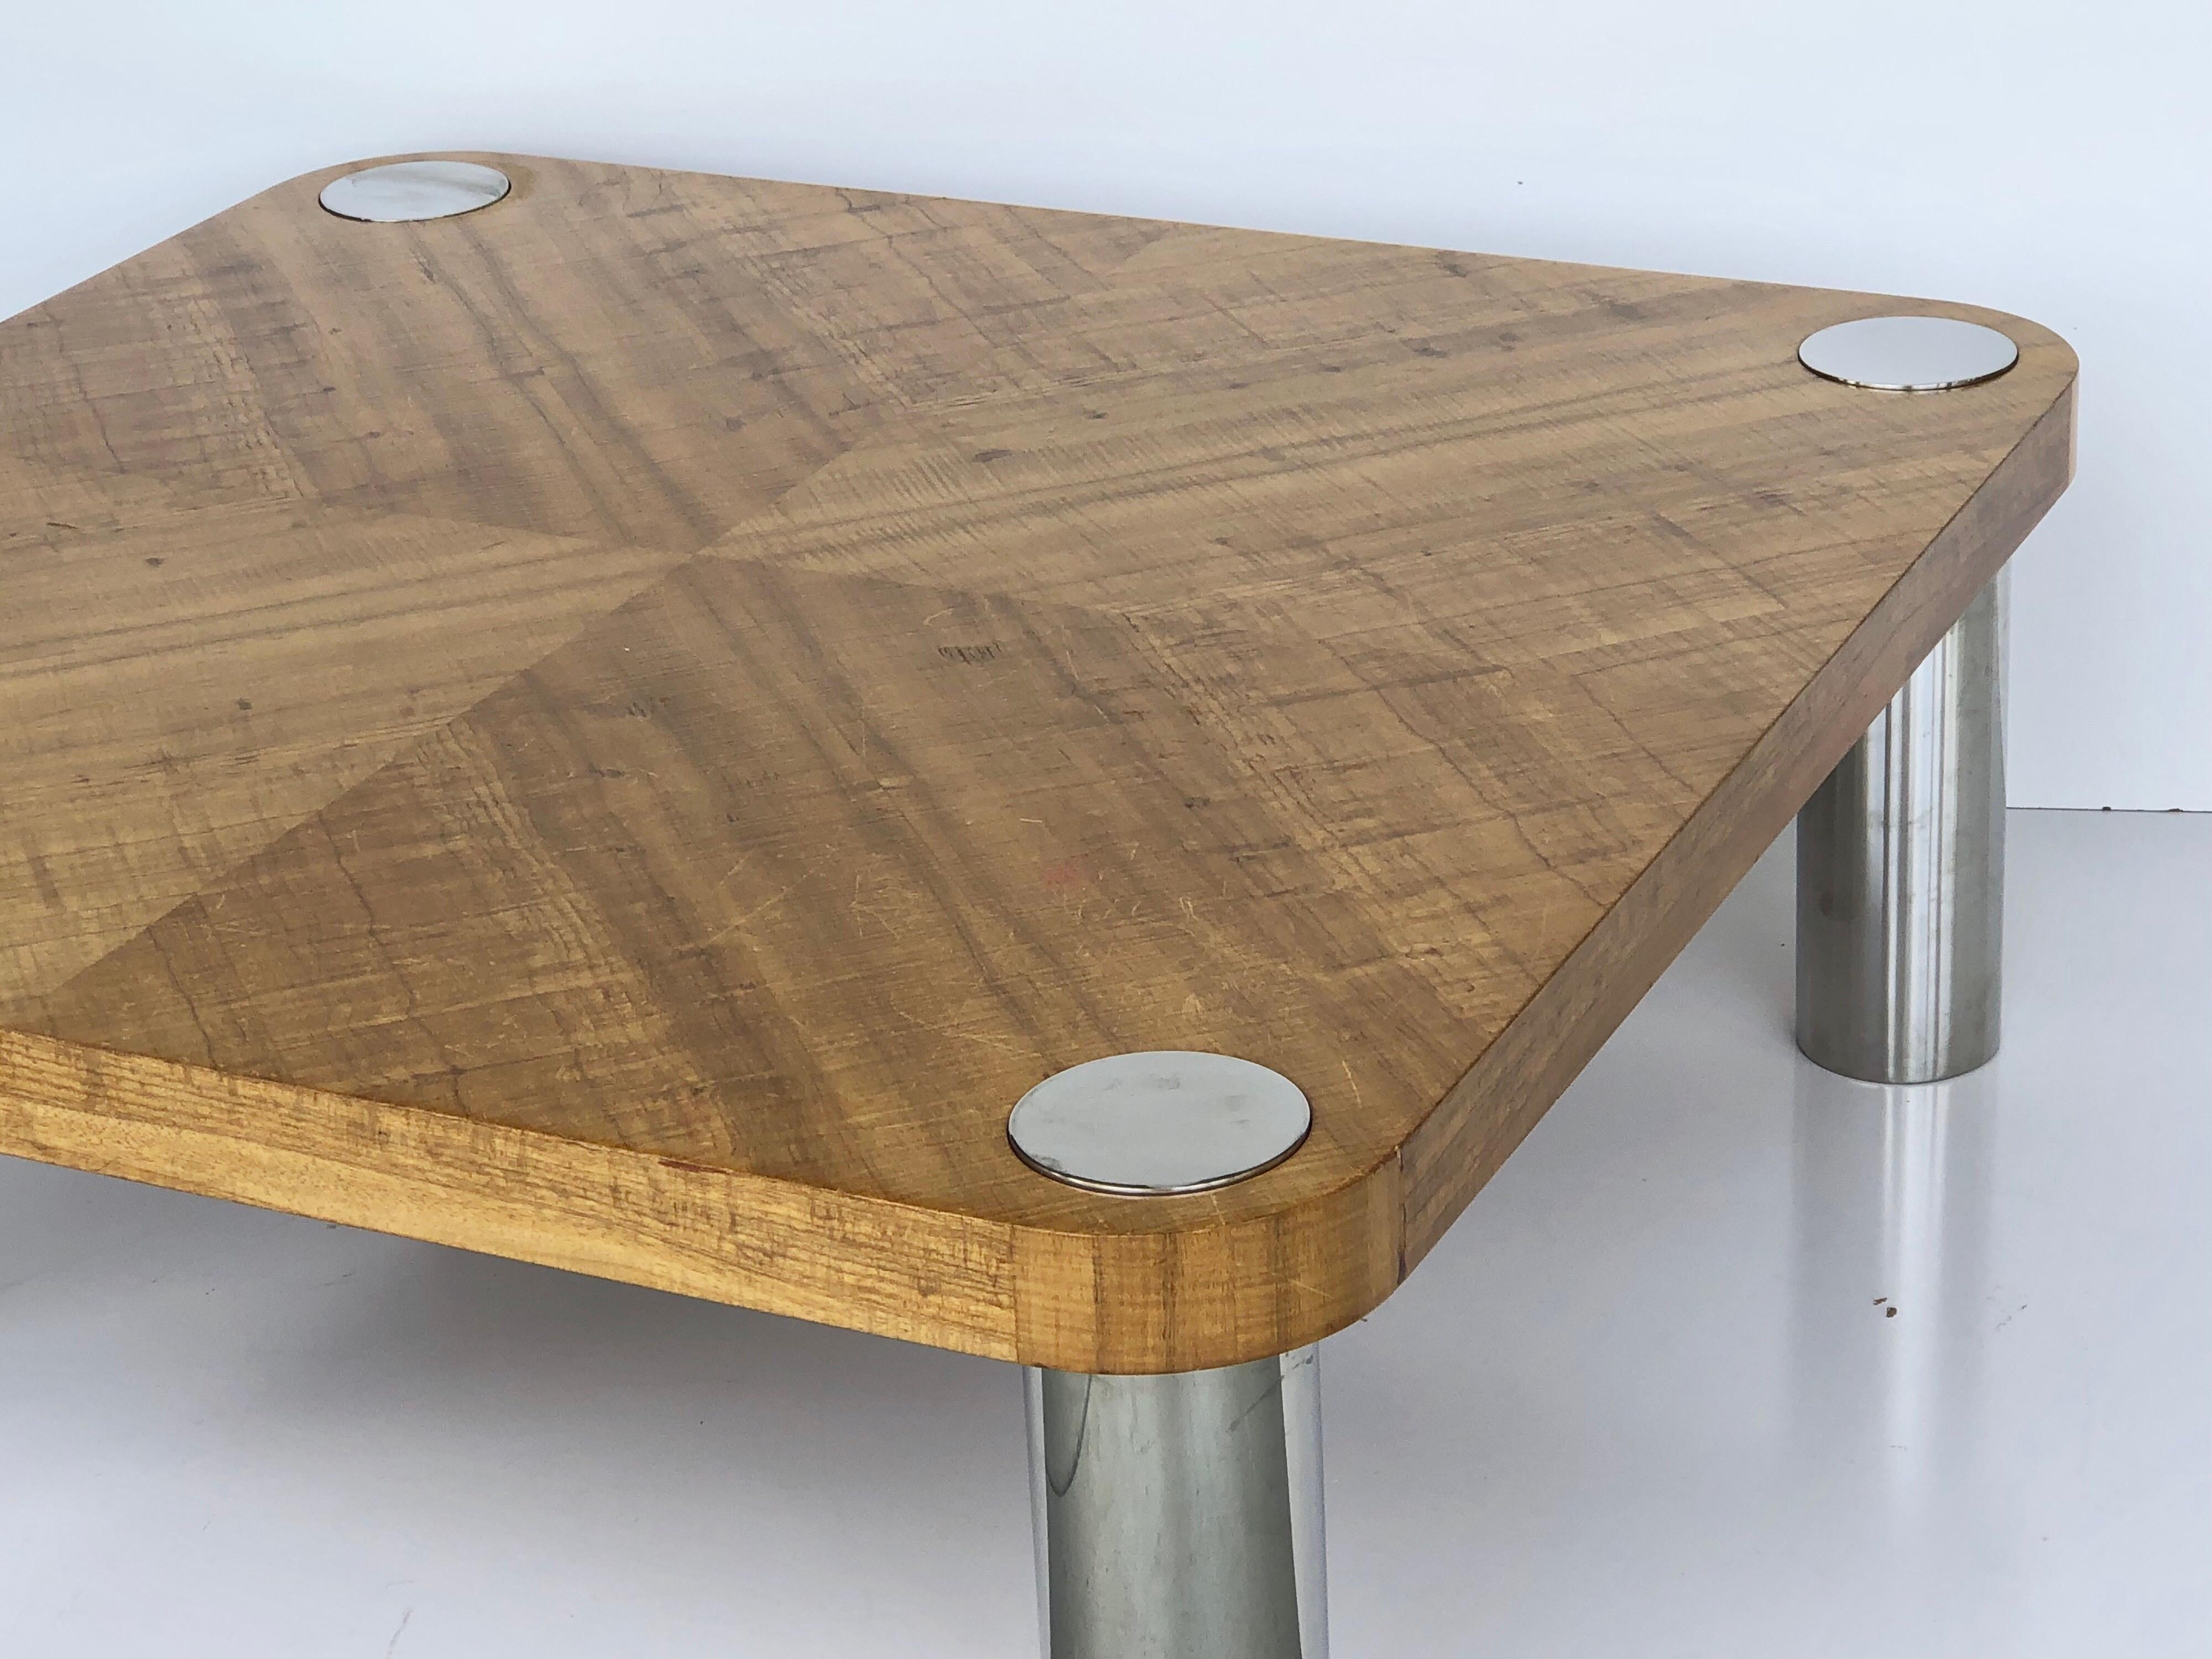 American Vladimir Kagan Stainless Steel and Wood Coffee Table